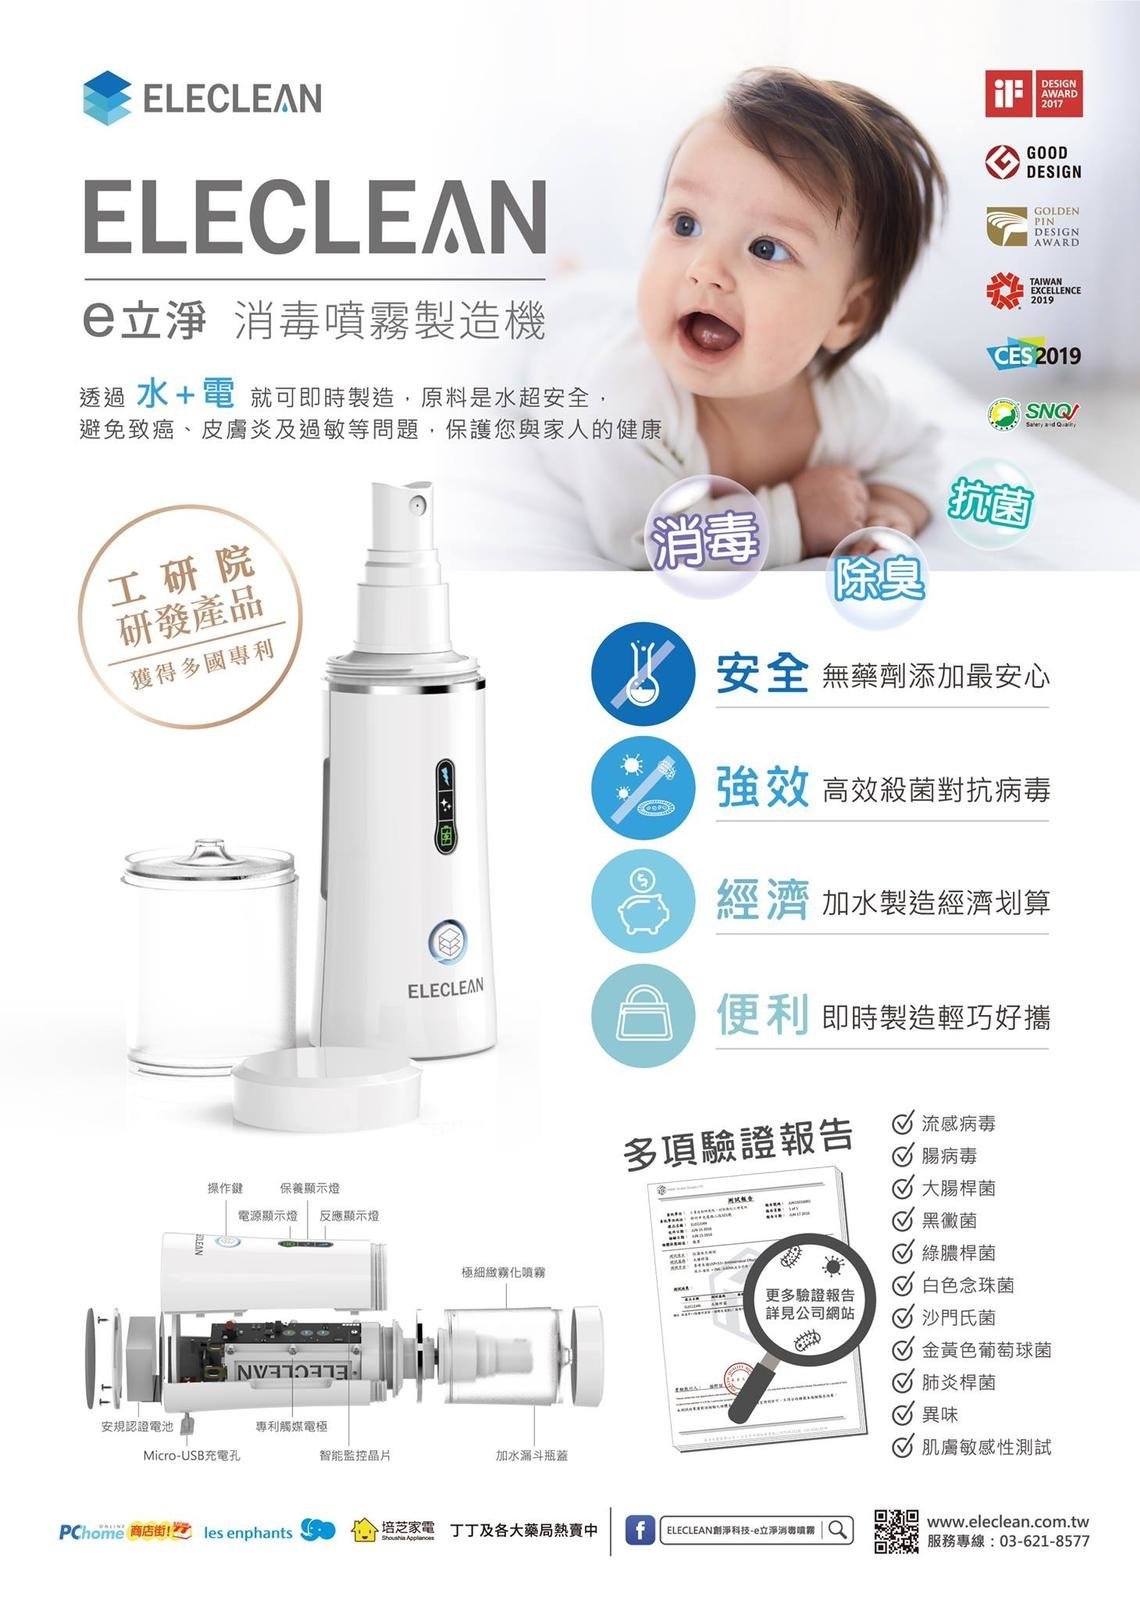 eLijing- Disinfection Spray Making Machine [Licensed in Hong Kong]